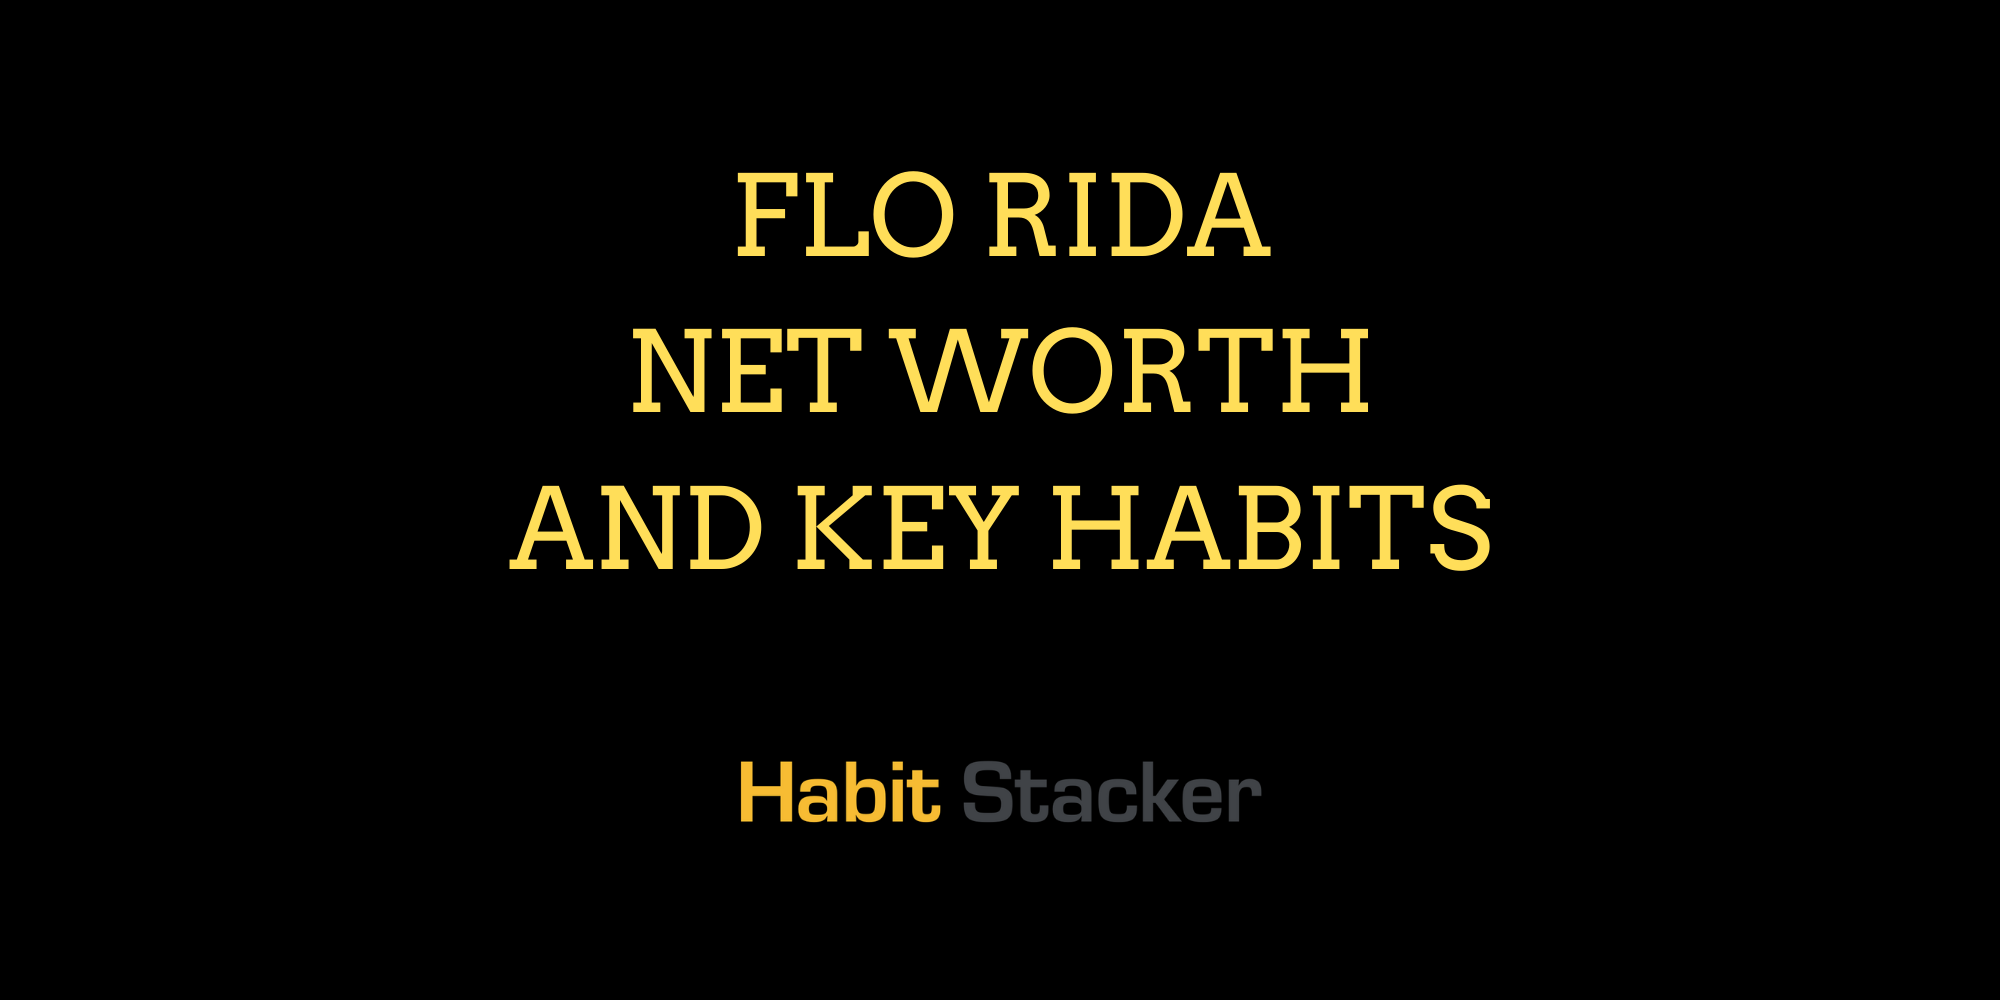 Flo Rida Net Worth and Key Habits